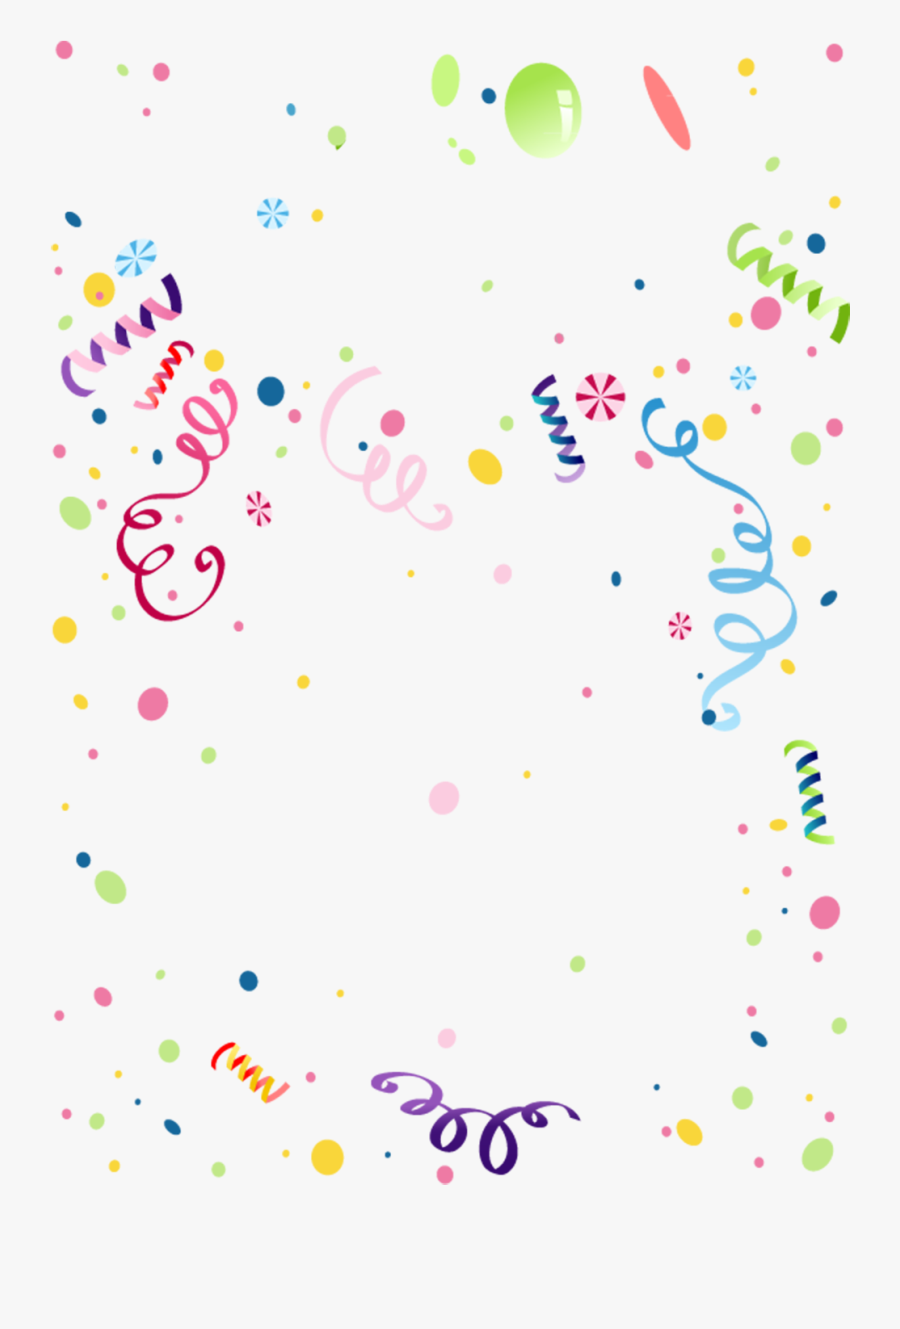 Clip Art Celebration Backgrounds - Free Celebration Background Png, Transparent Clipart